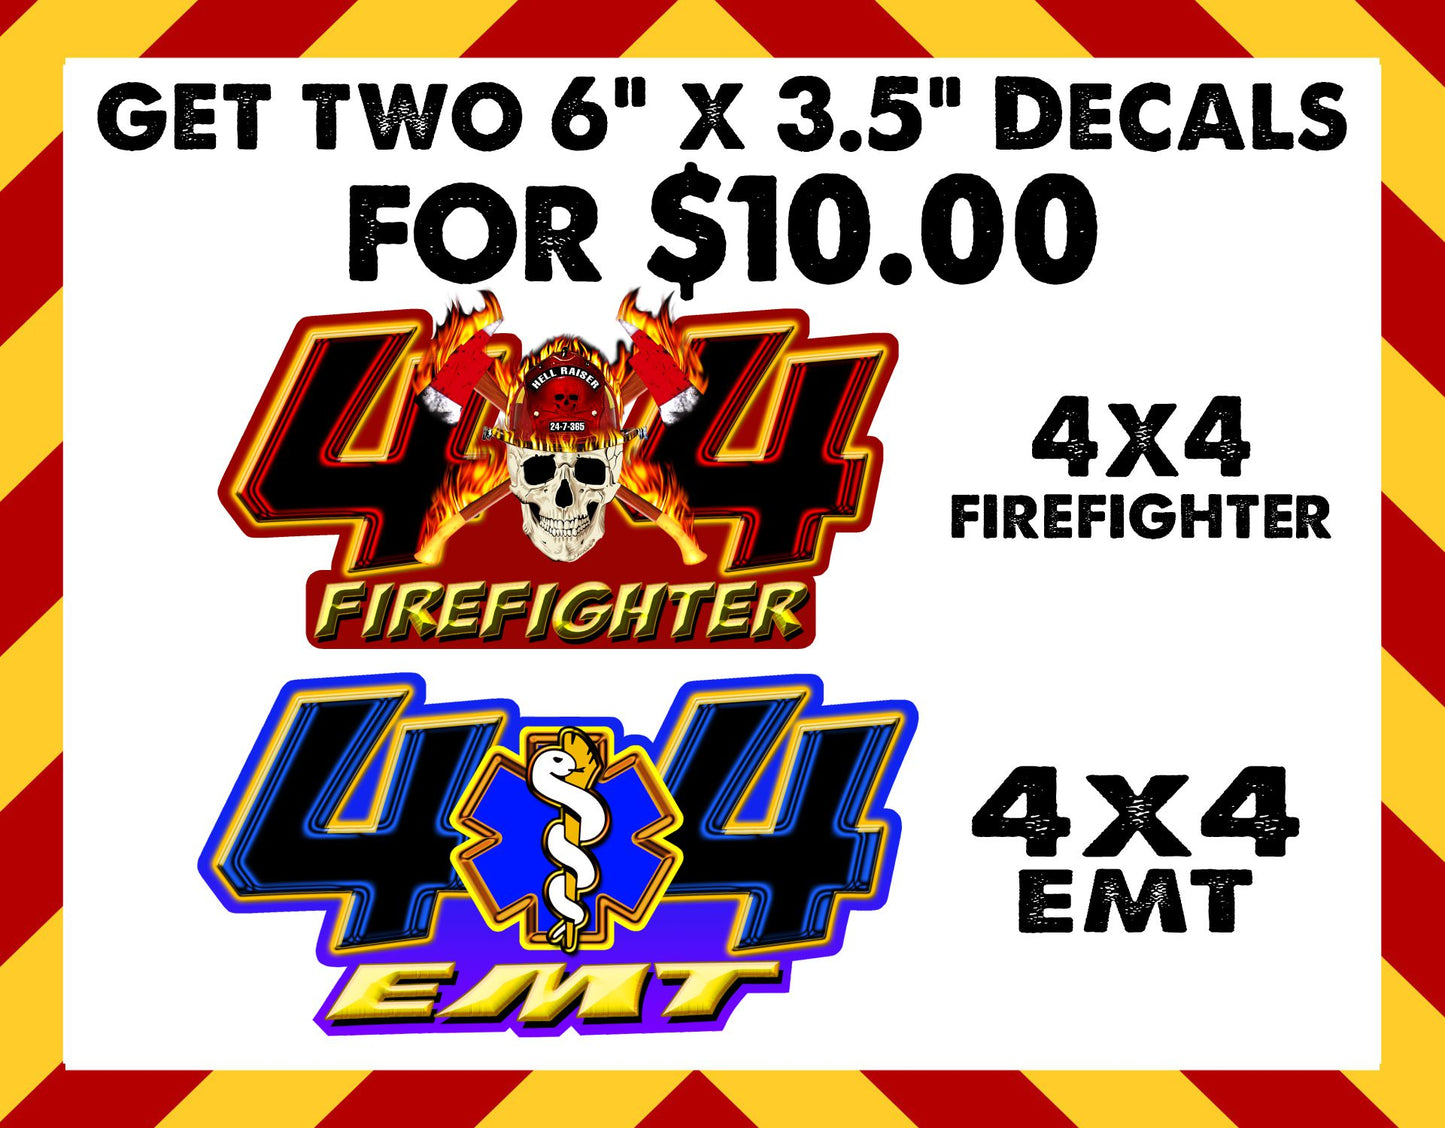 Window Decals - 4x4 Firefighter and/or EMT Window Decals